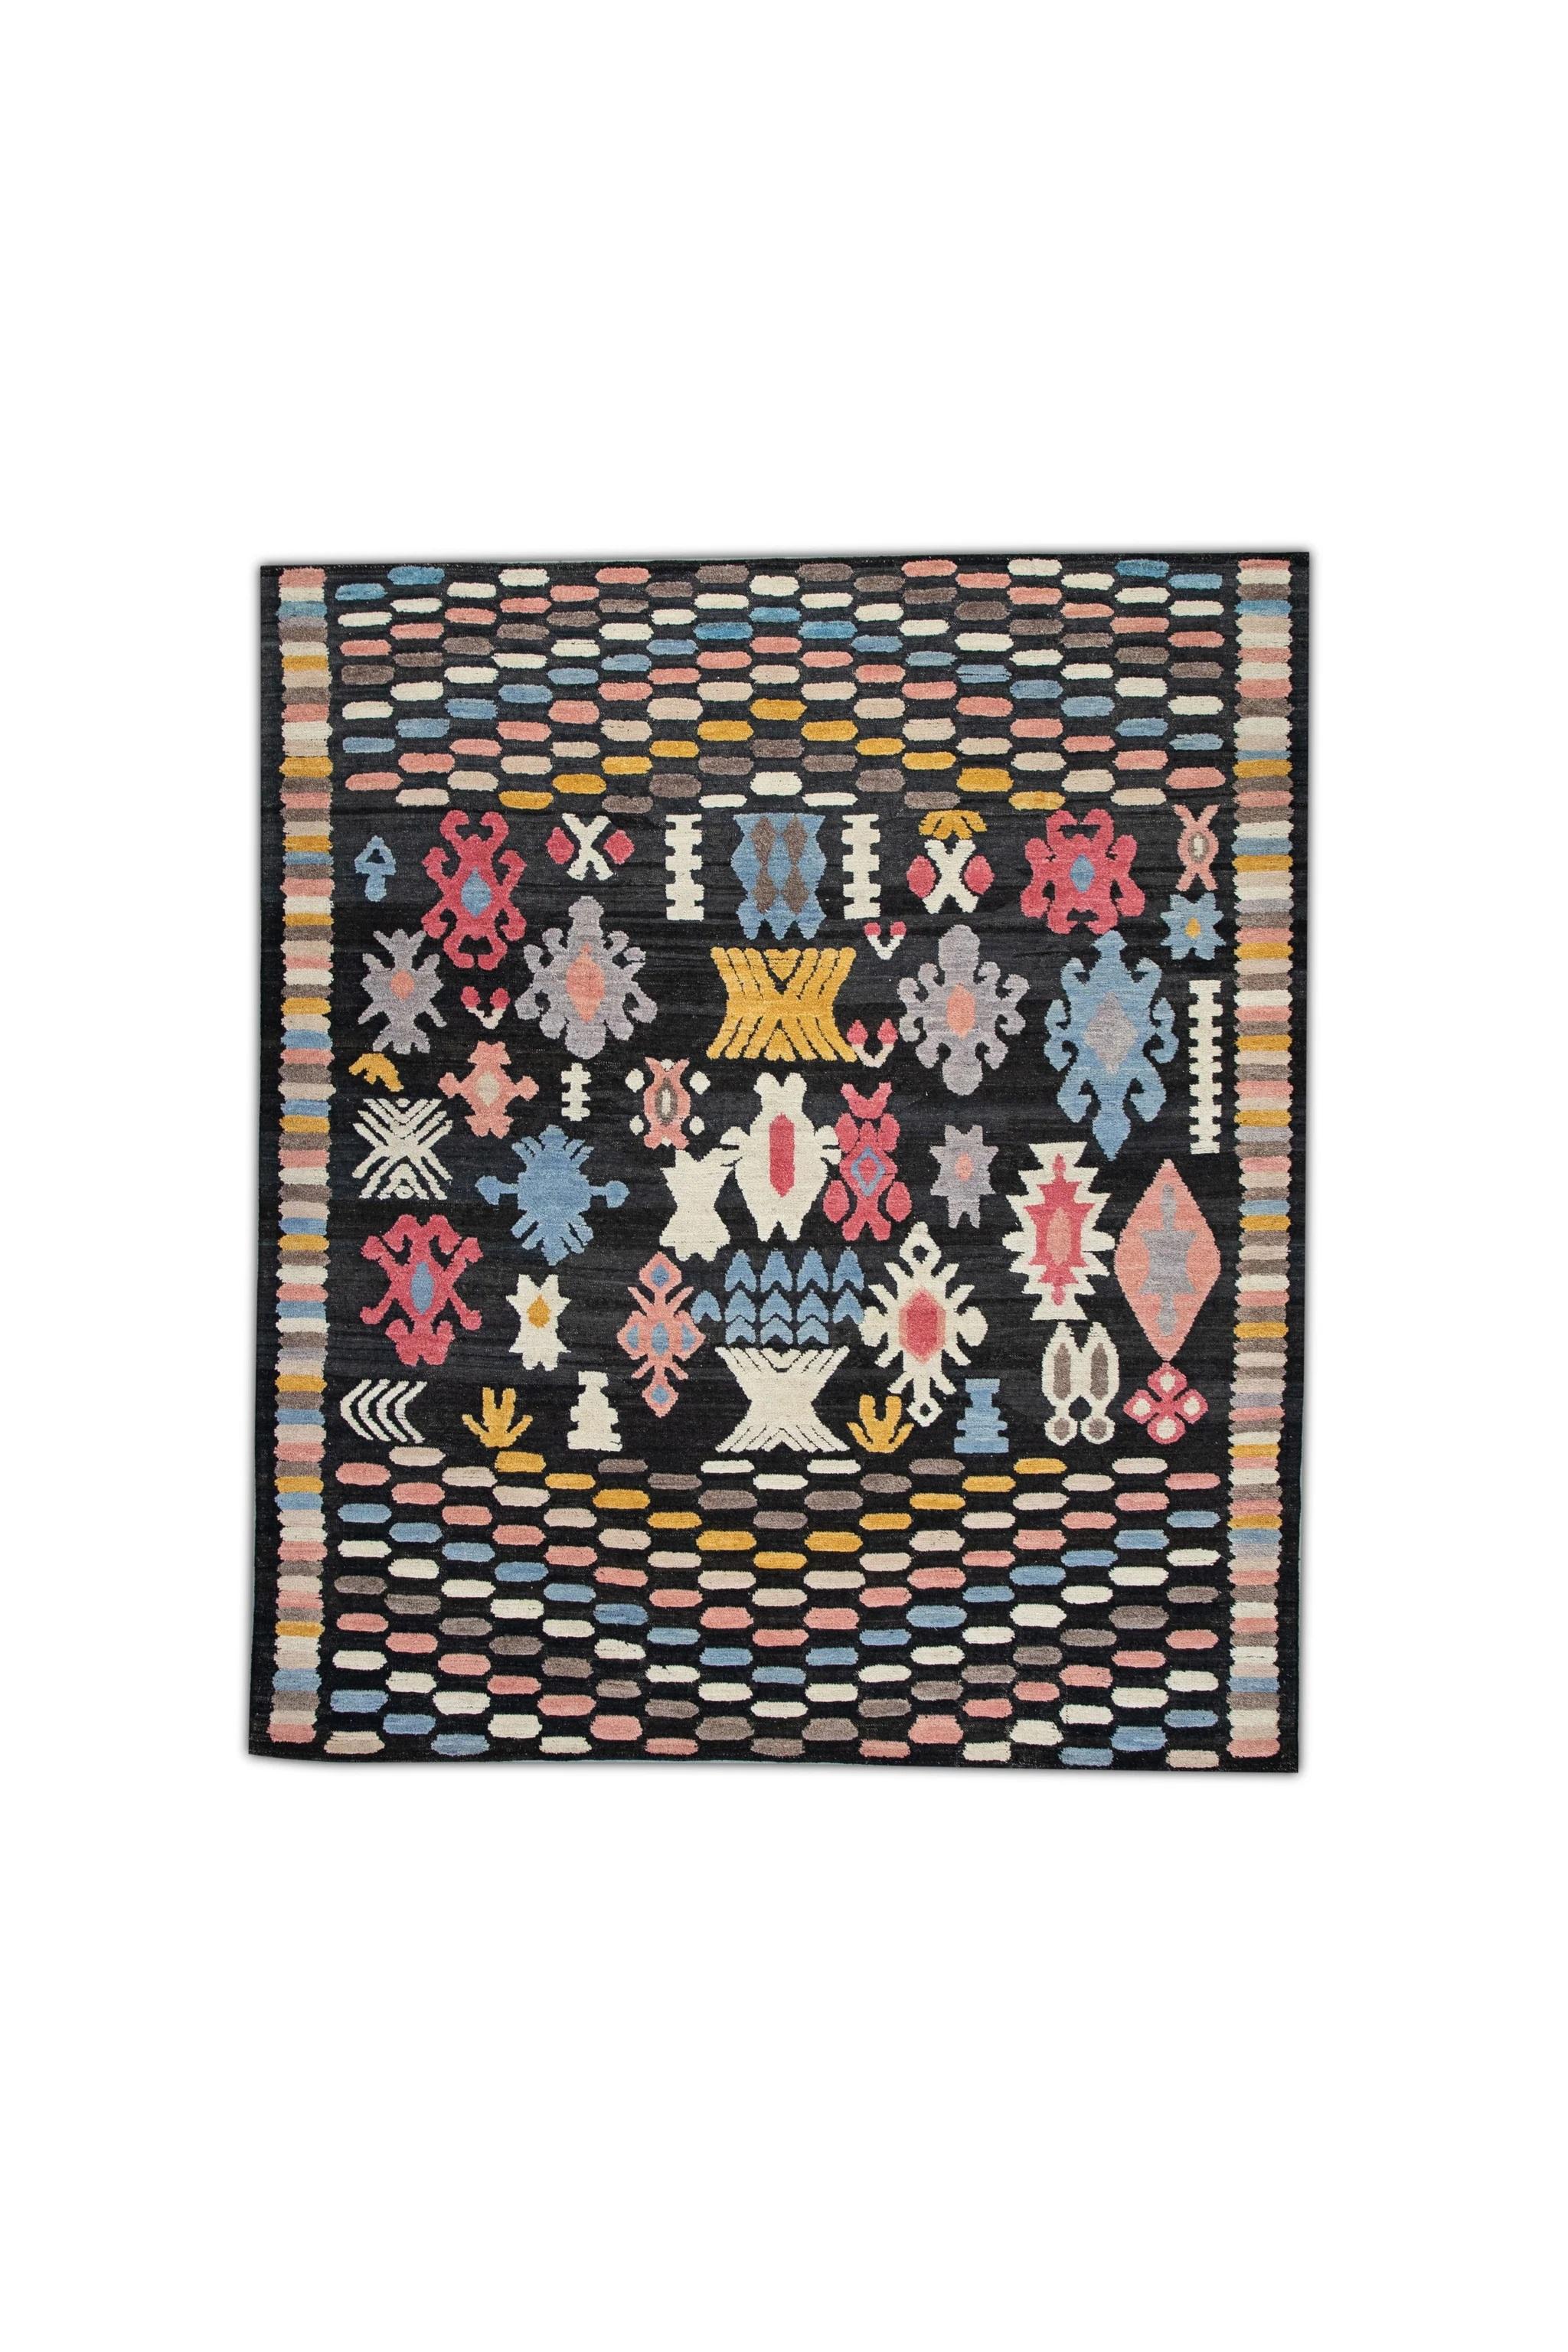 Flatweave Handmade Wool Rug in Pink, Blue, Yellow Geometric Design 8'11